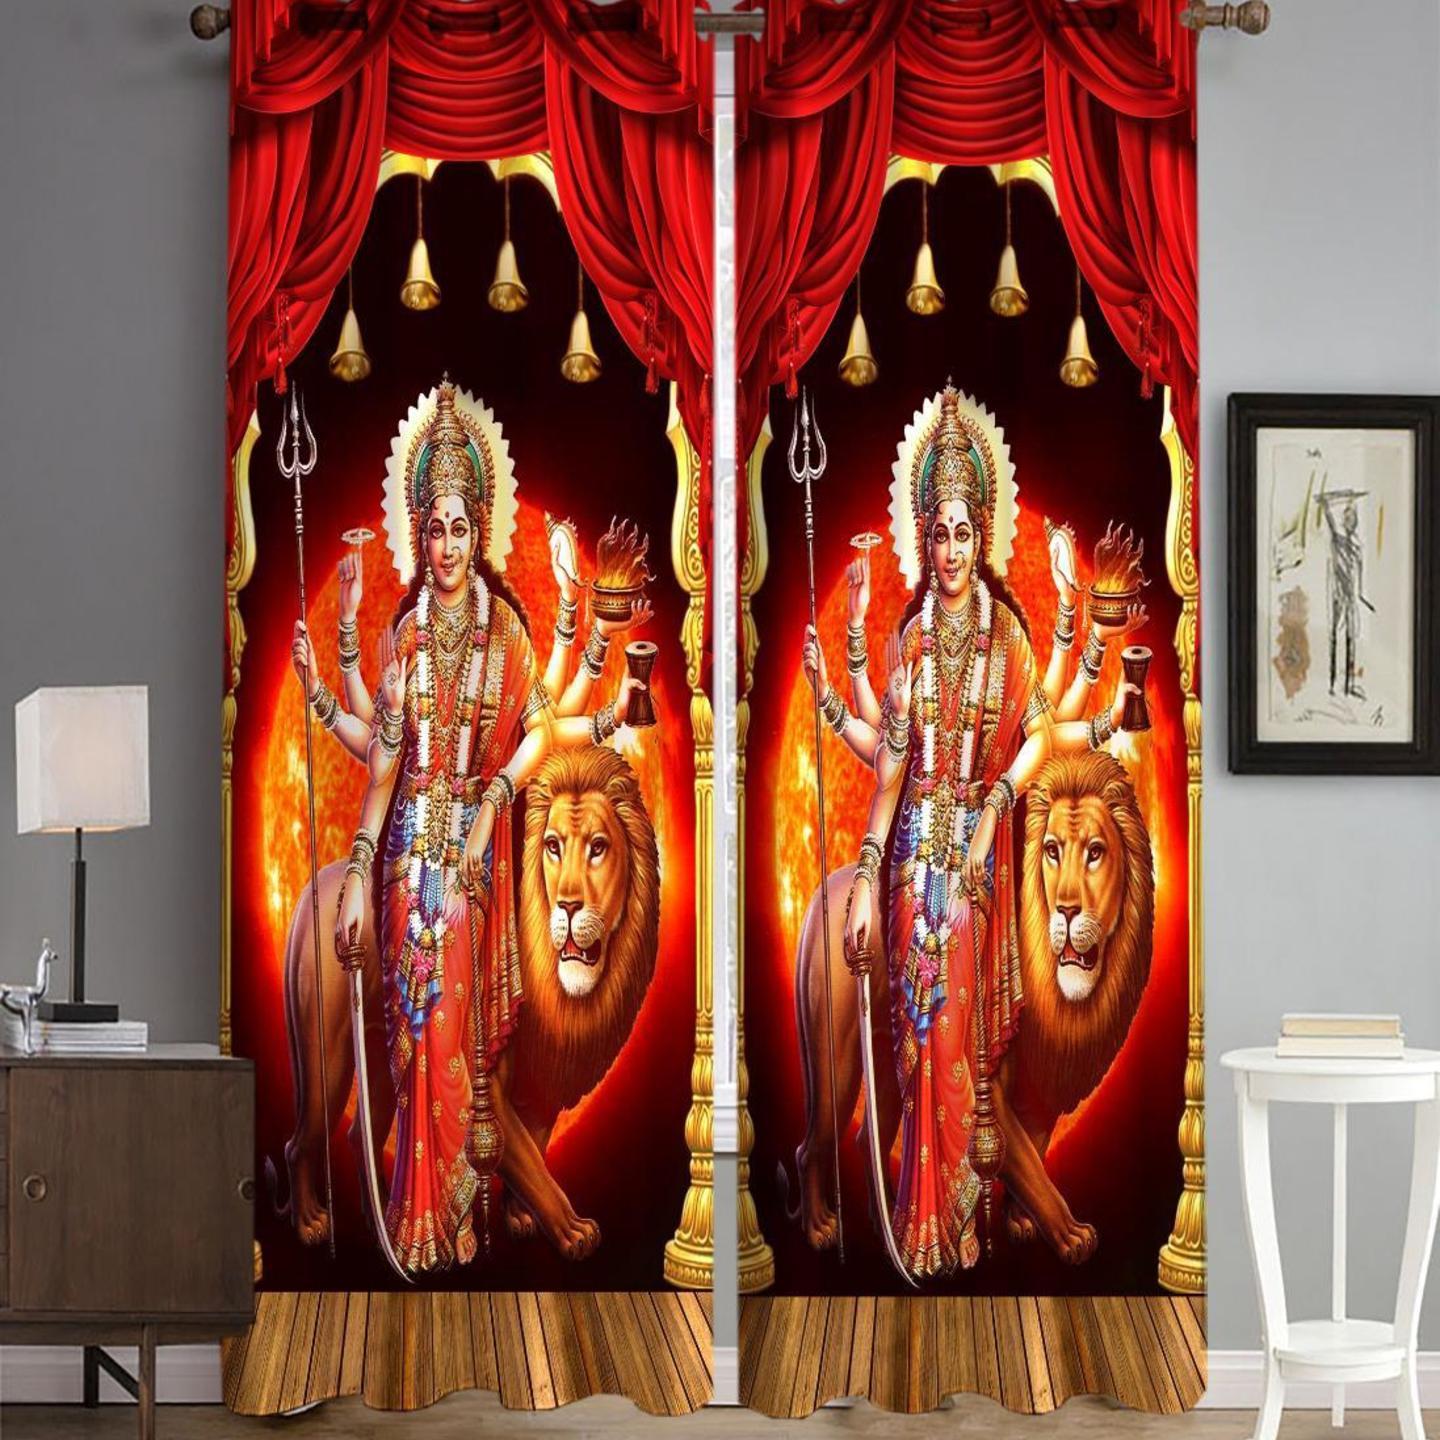 Handtex Home Polyester 3D God MATA Rani Digital Printed Curtain Solid 2 Pecs Multicolour (Door Size 4 x 9 Feet)